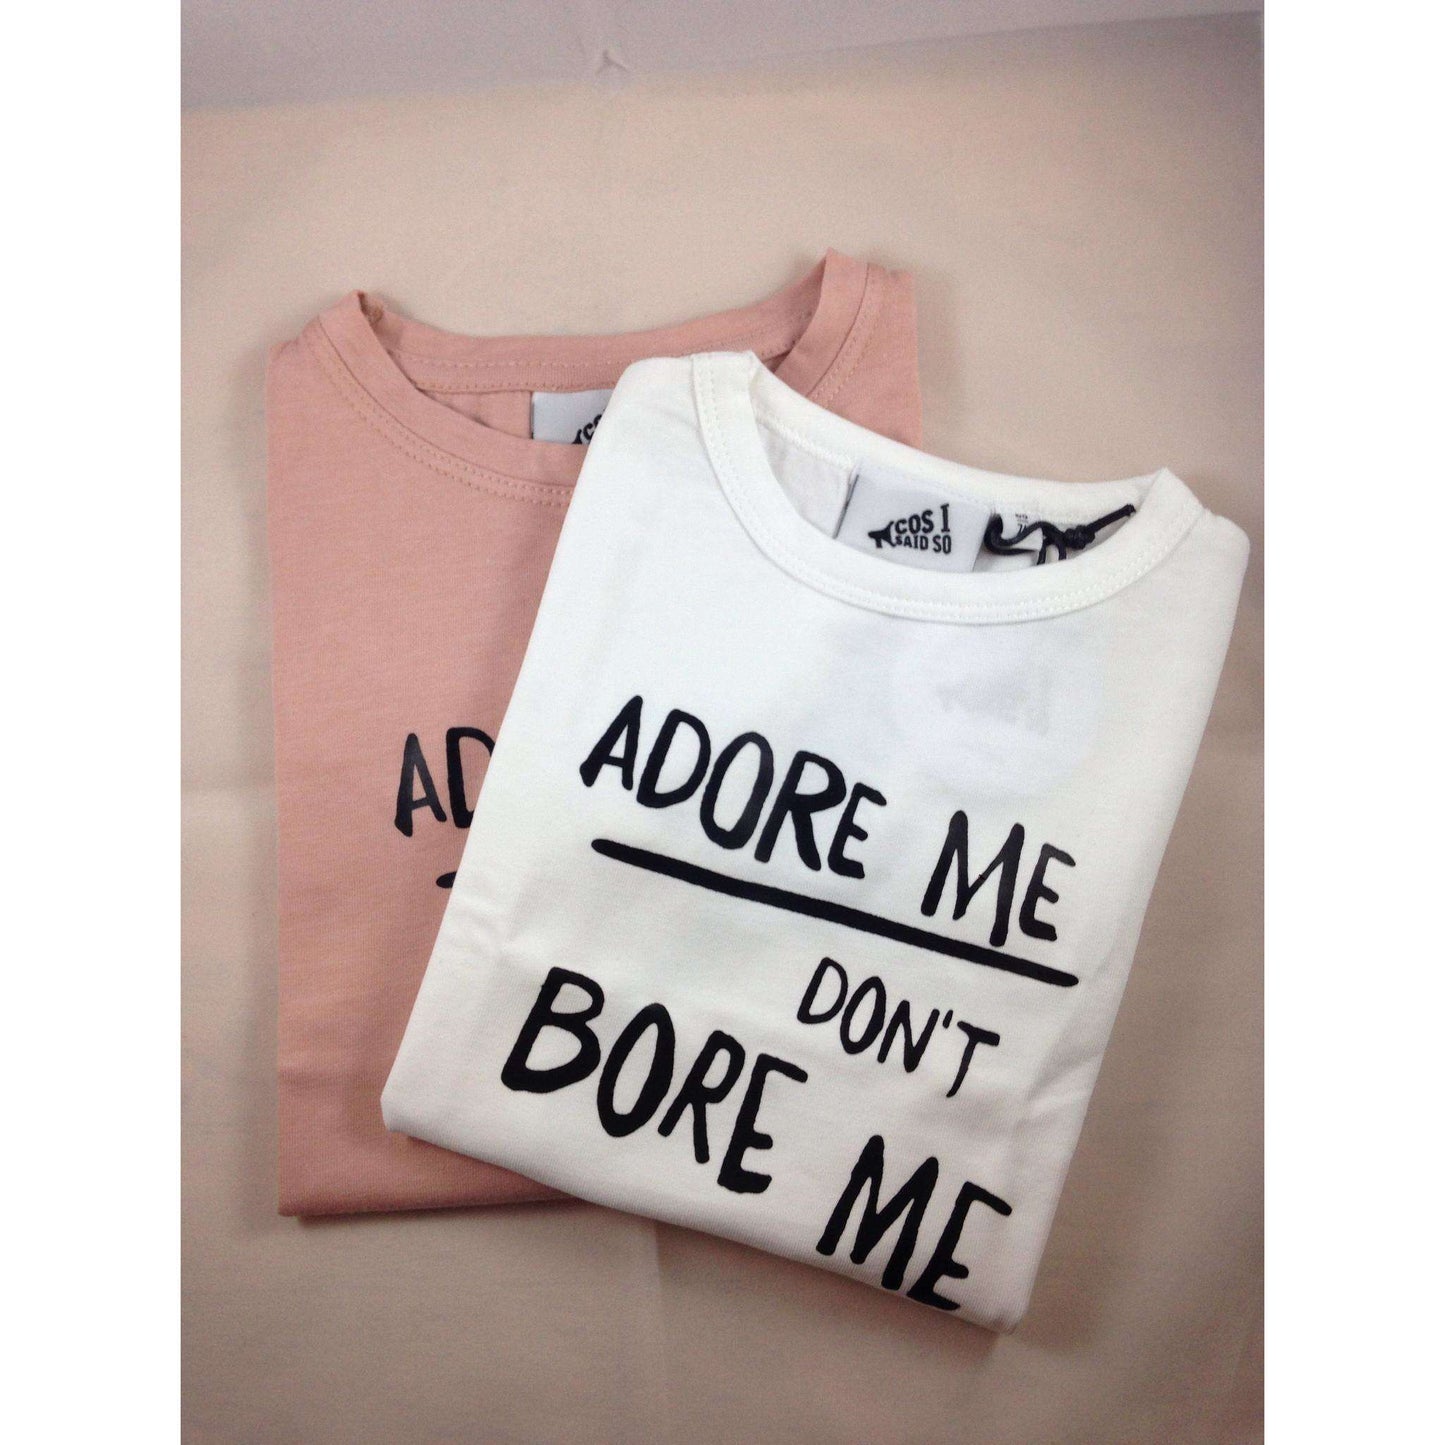 T-shirt / Adore Me / Roos / maat 68